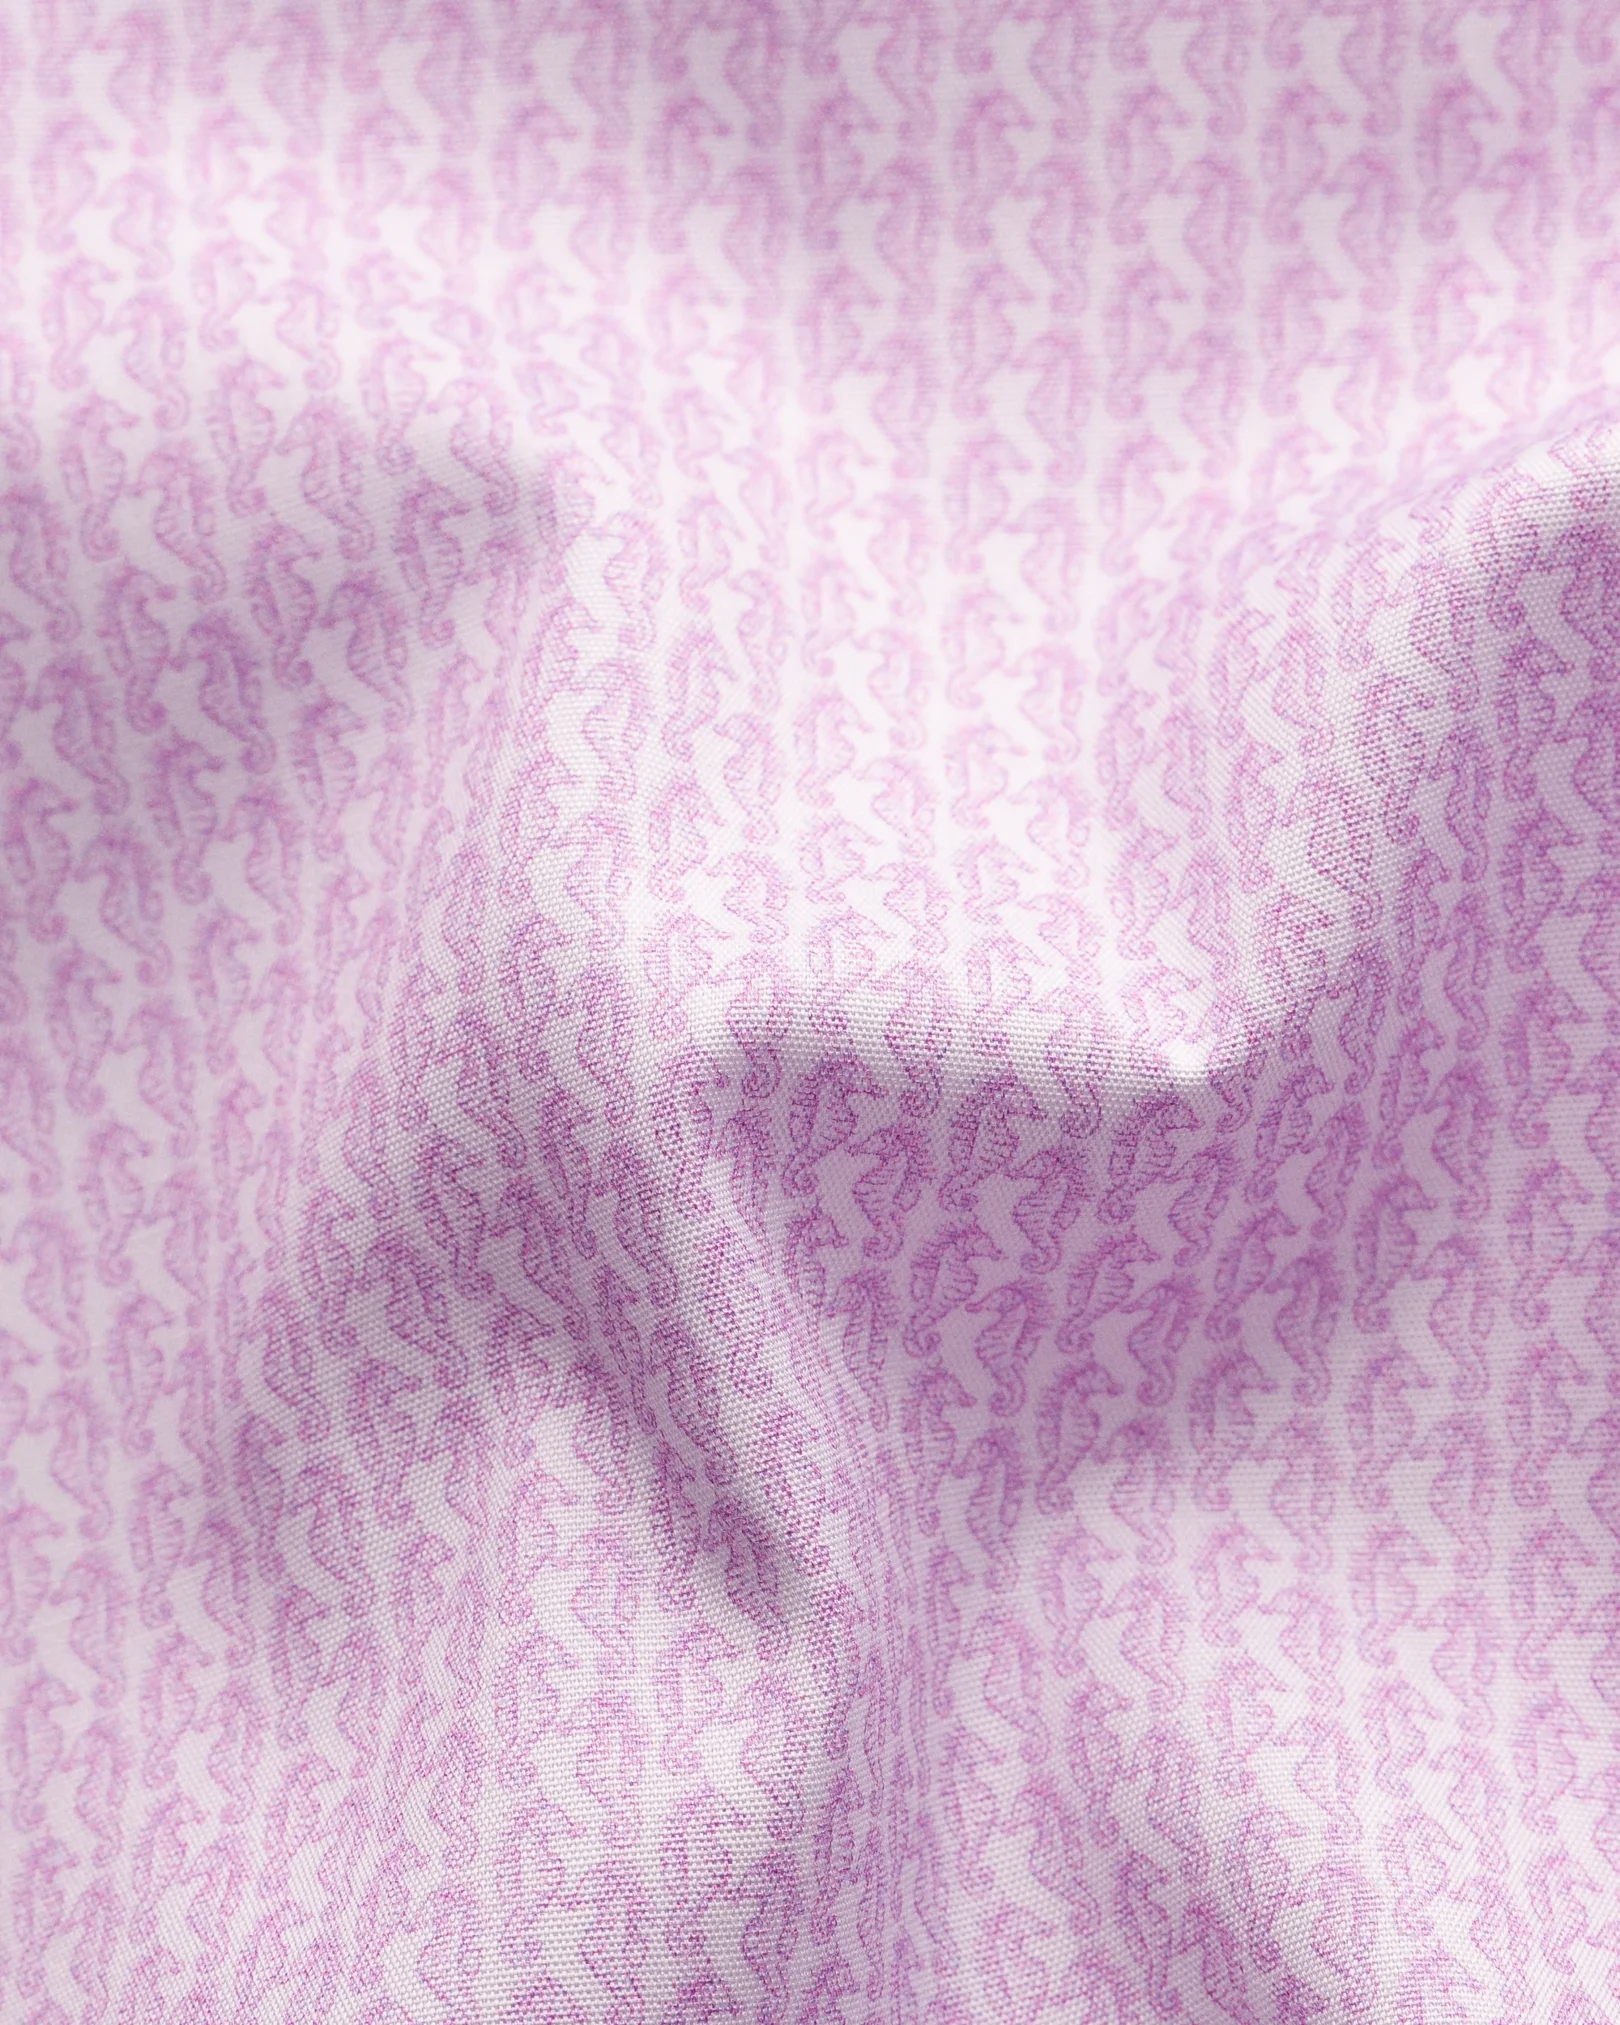 Eton - light purple seahorse print short sleeve